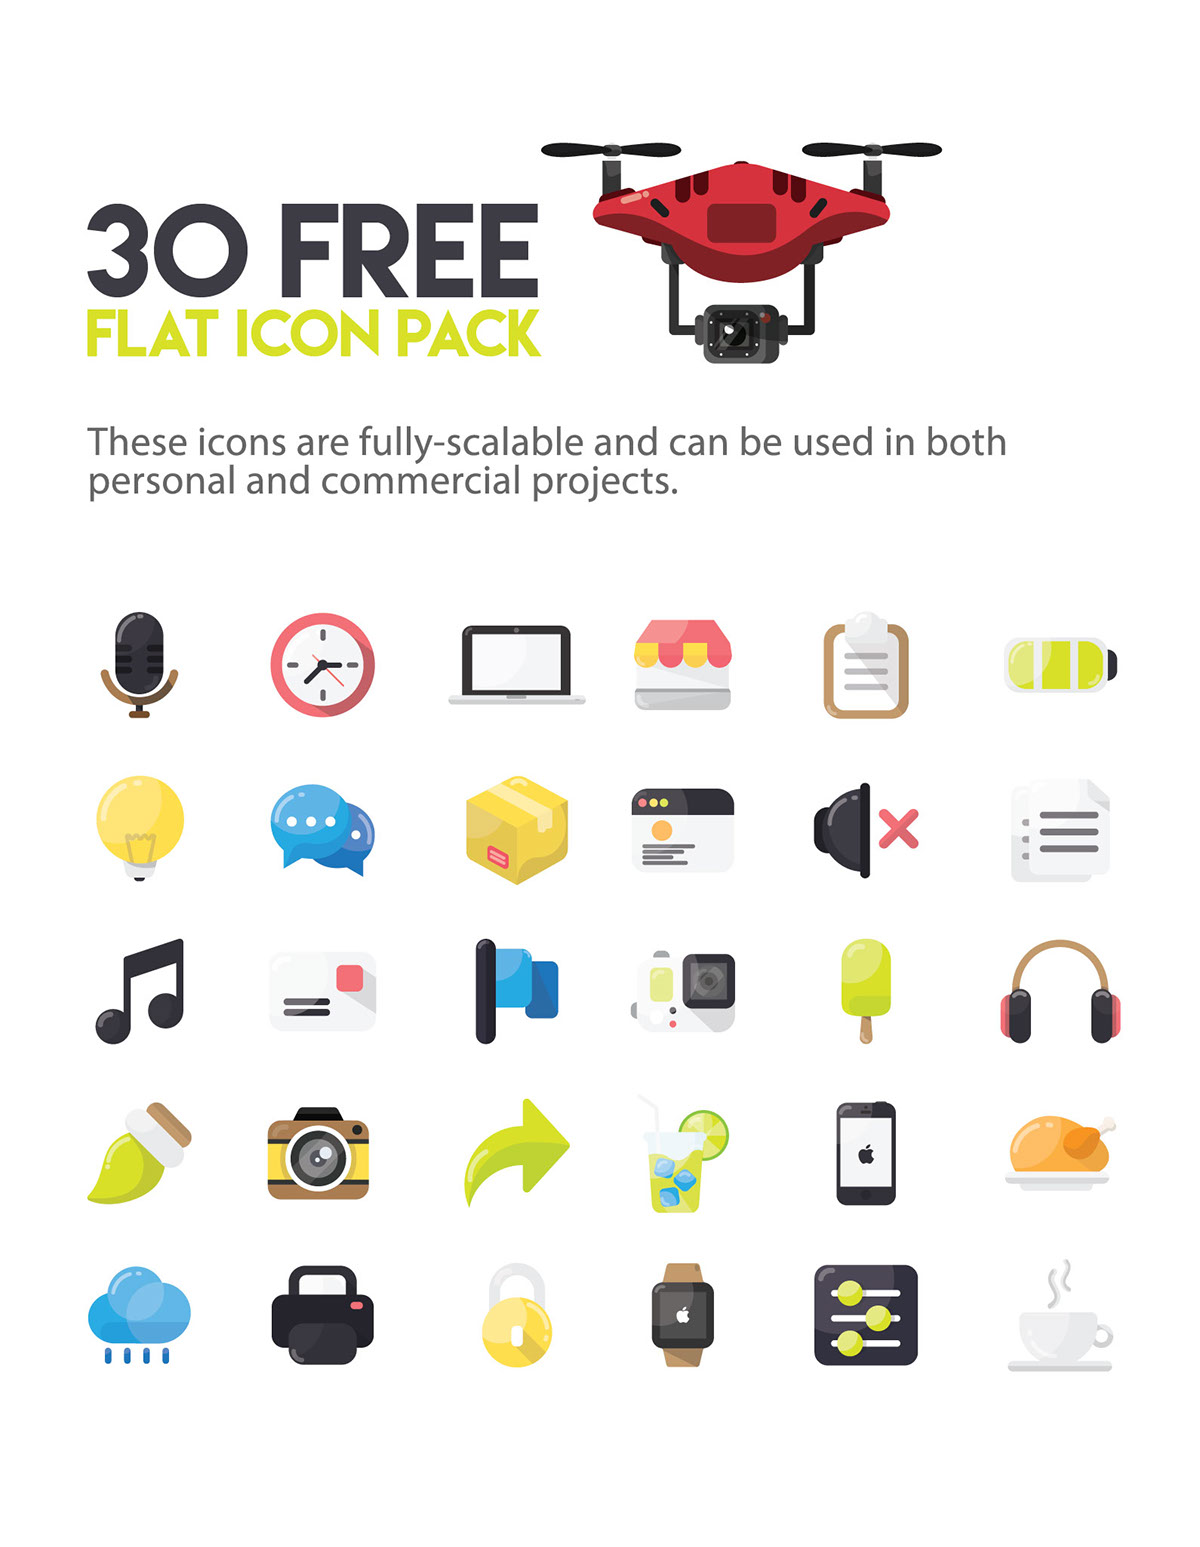 icons free